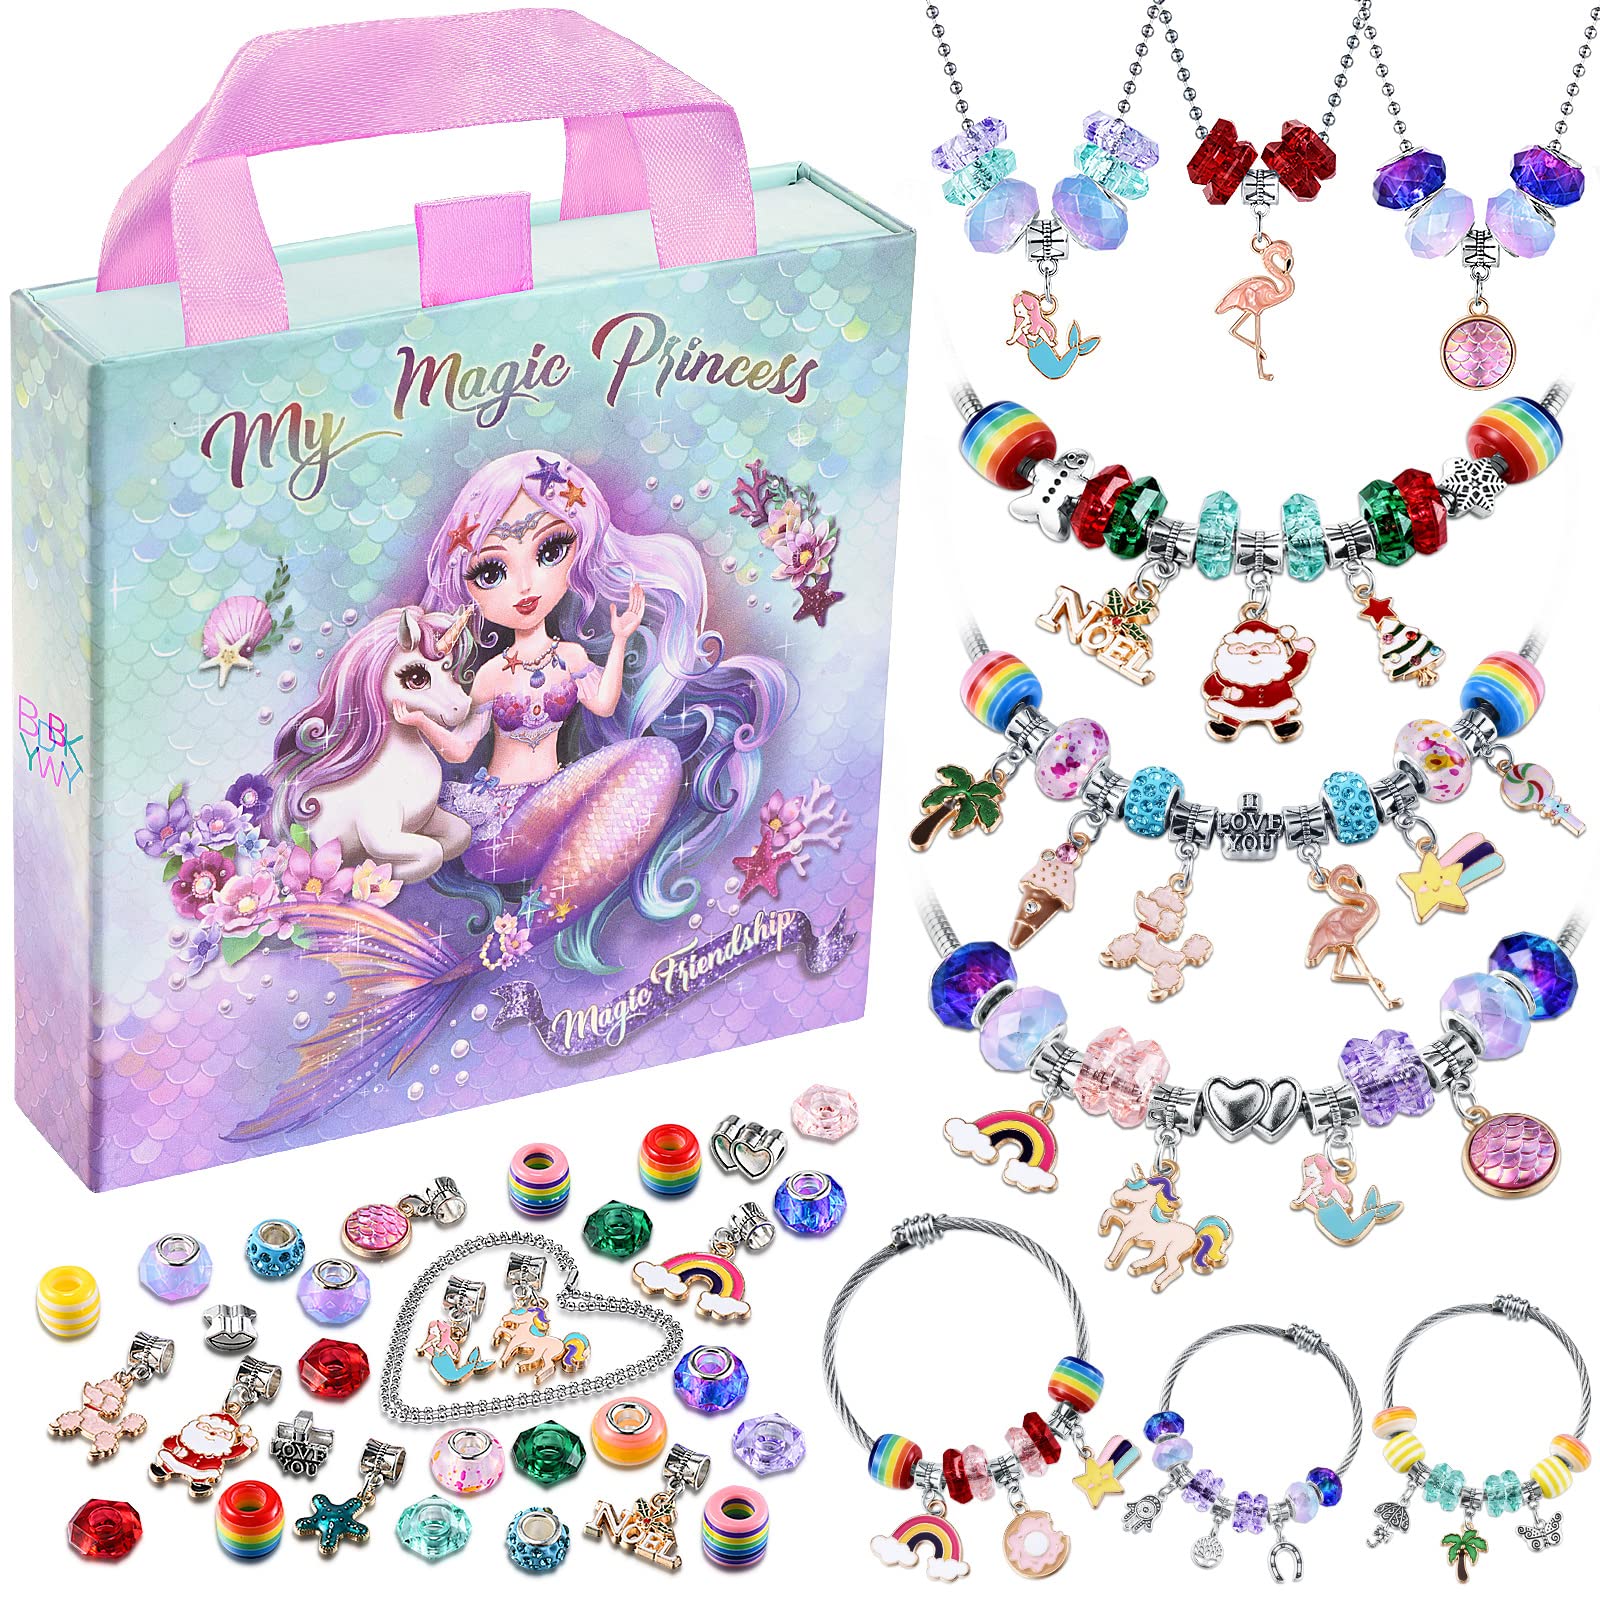 7 8 9 10 Year Old Girls Toy, Friendship Bracelet Kit for 6-12 Year